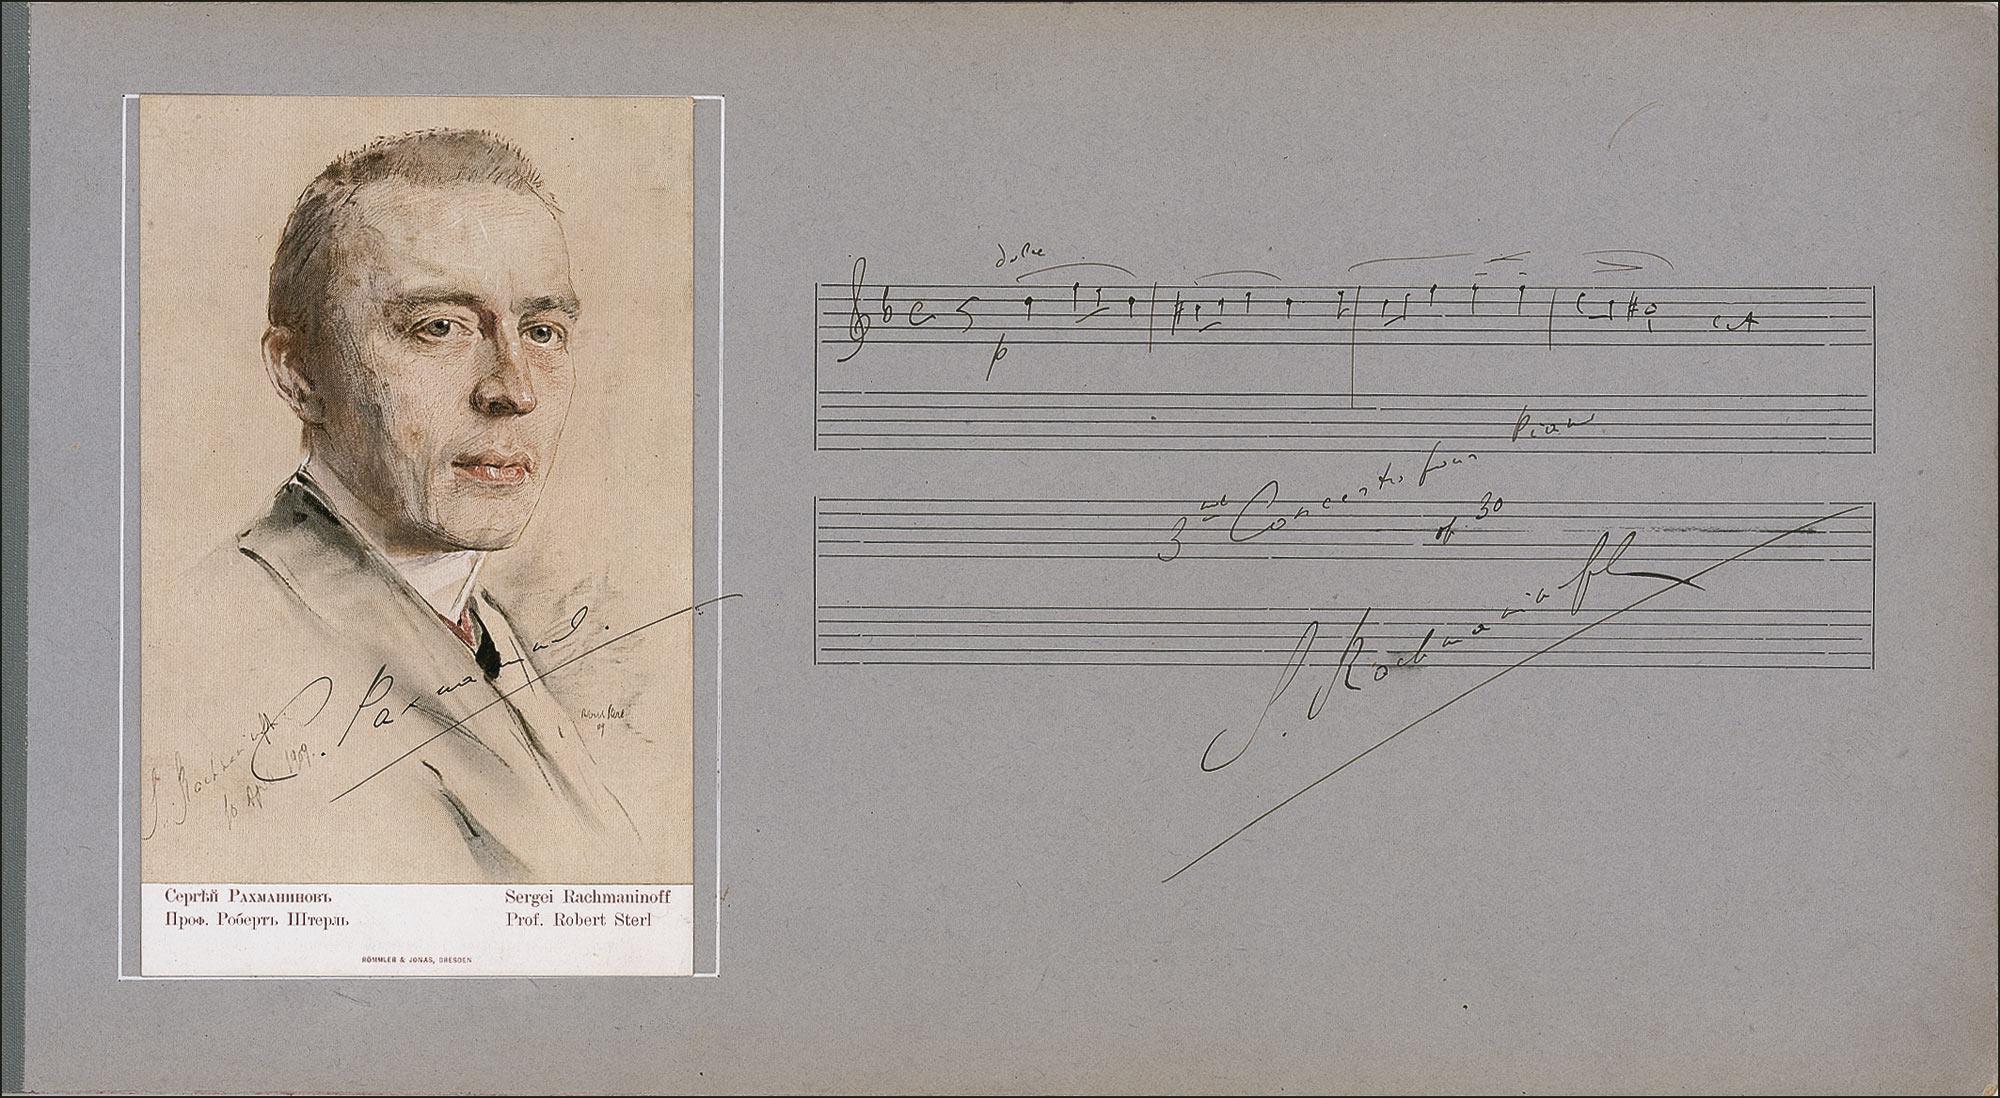 Sergei Rachmaninoff ou simplesmente génio?